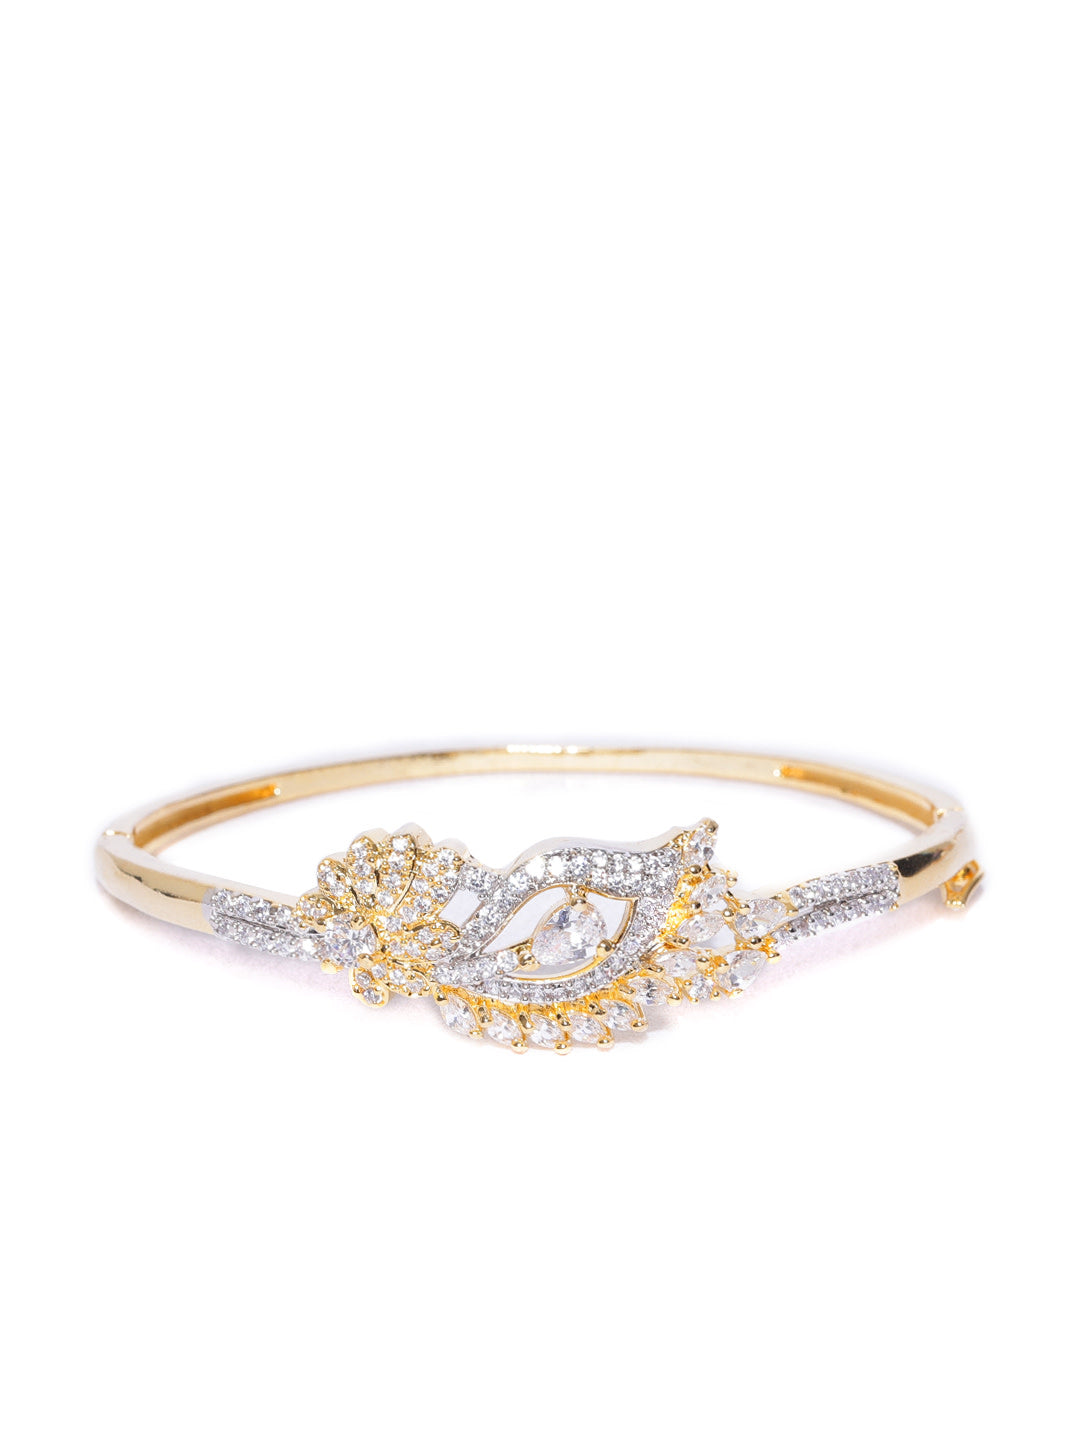 Gold-Plated American Diamond Studded, Peacock Inspired Bracelet